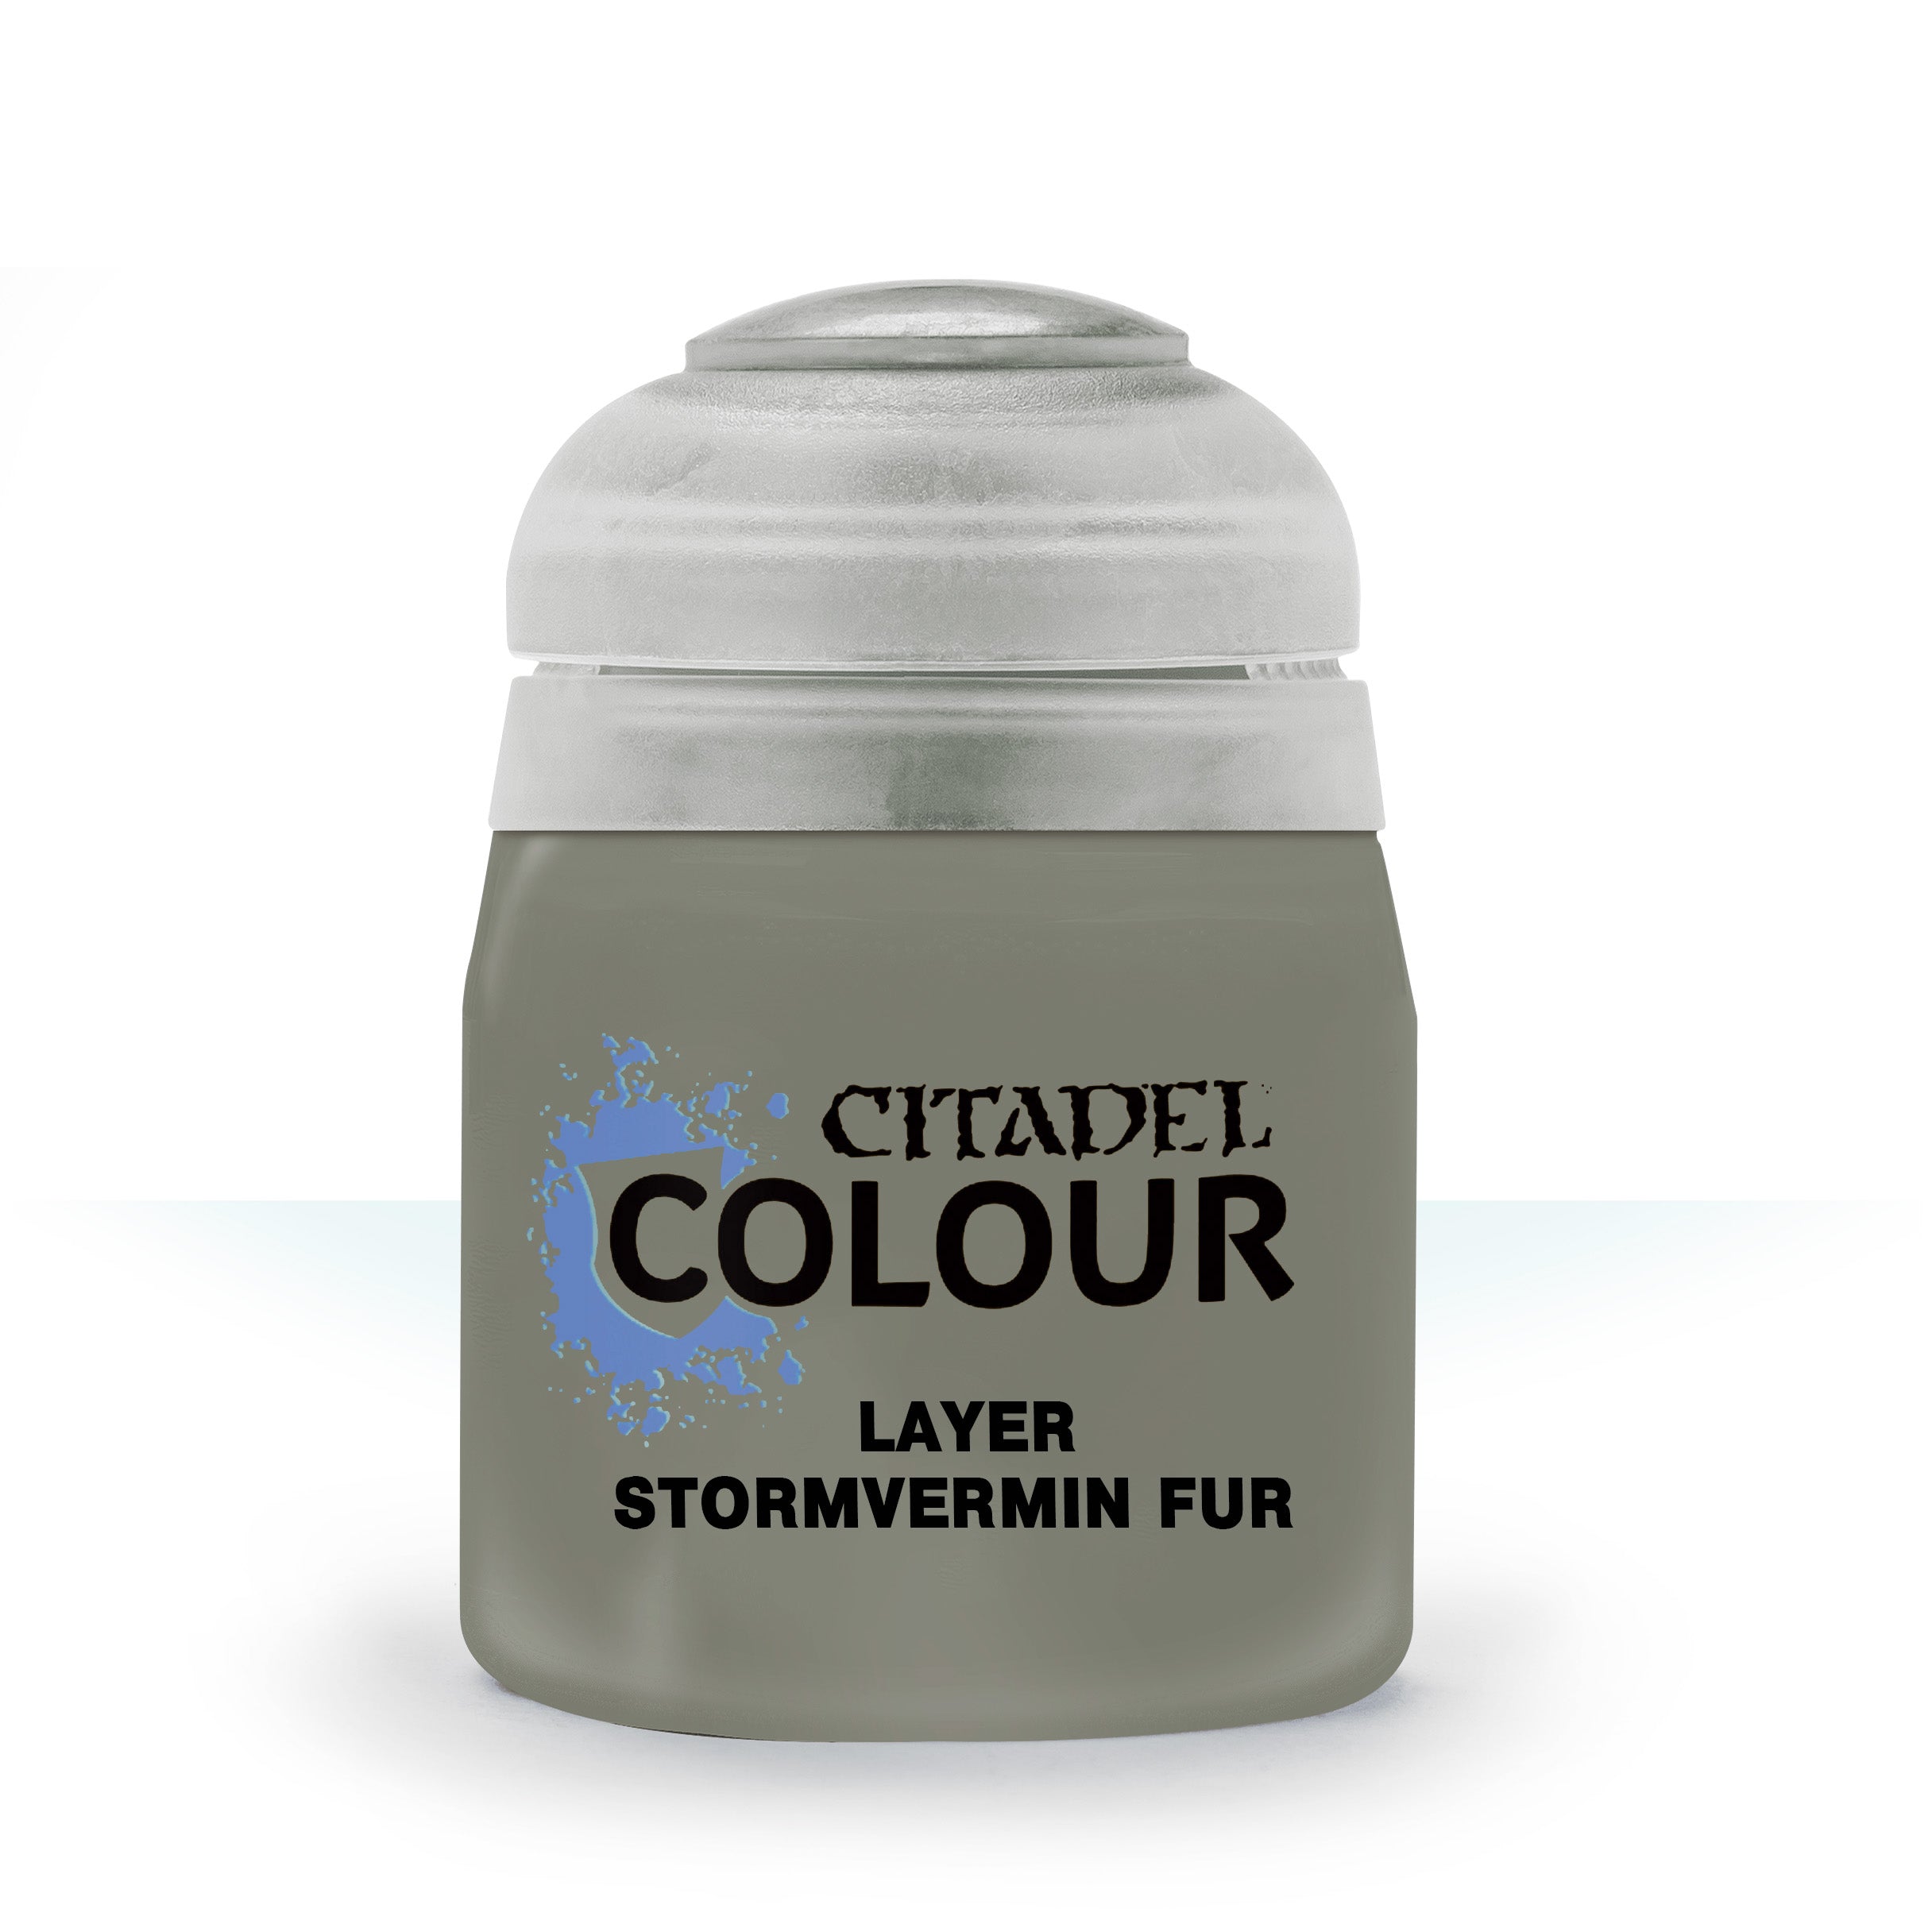 Layer: Stormvermin Fur